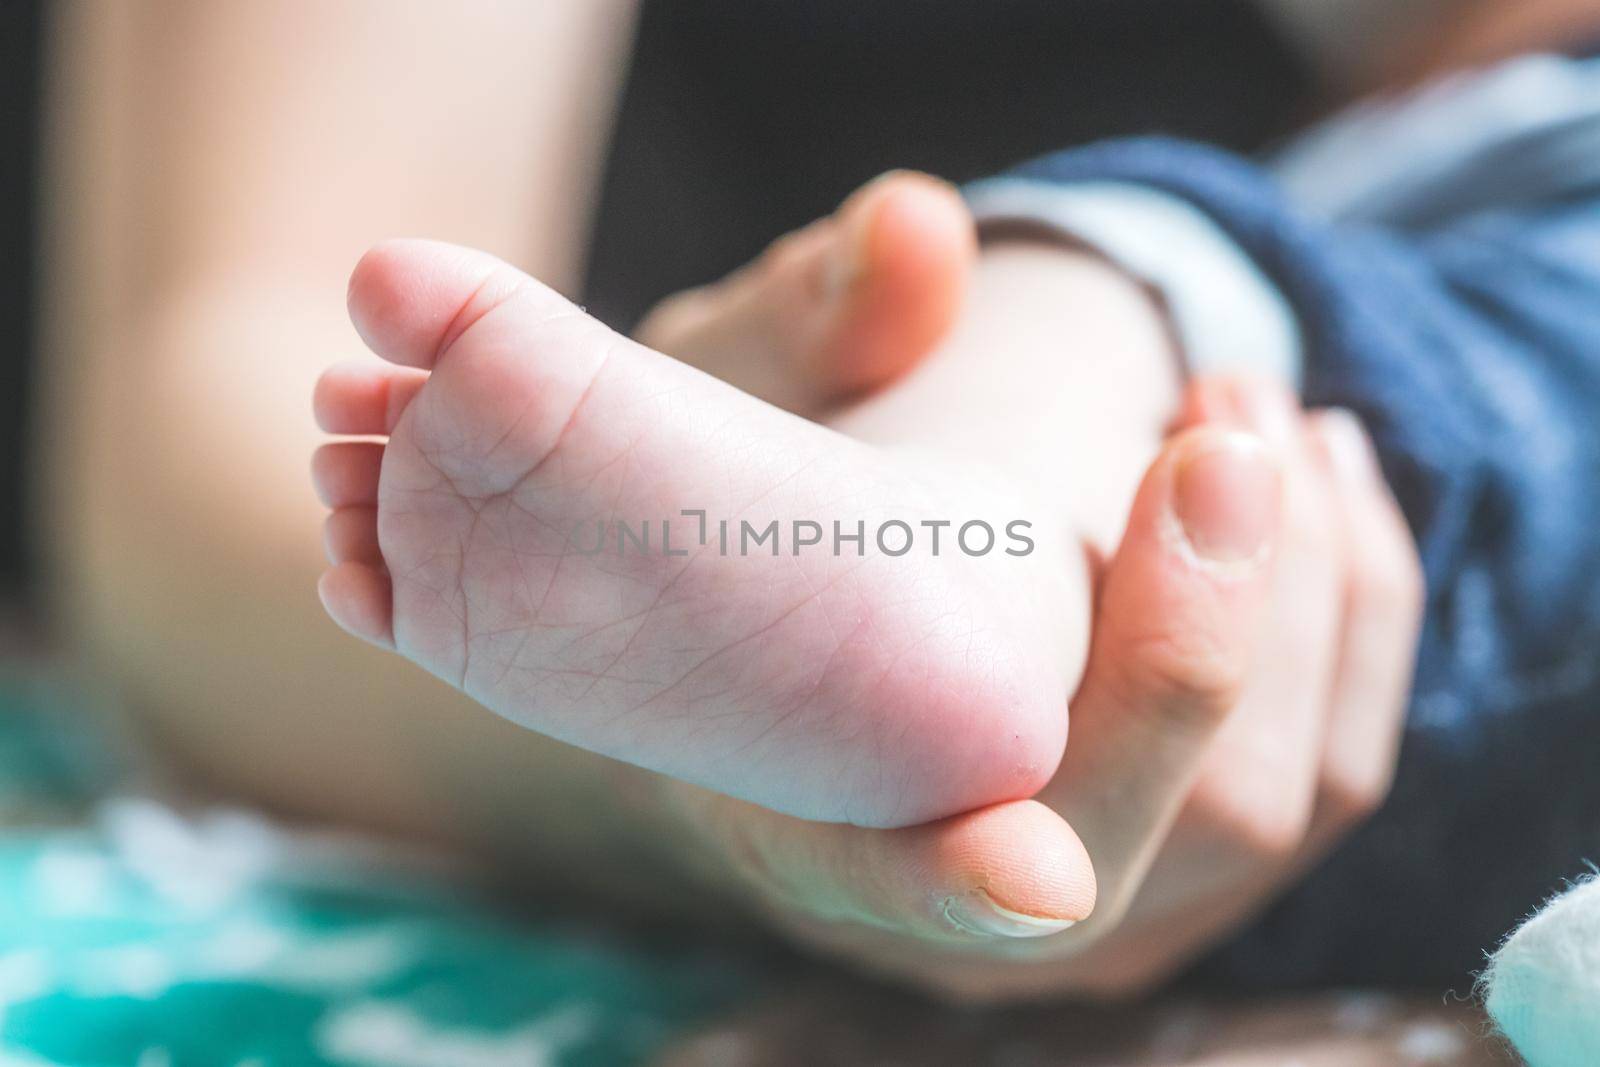 Baby and newborn concept: Mother’s hands holding newborn baby feet by Daxenbichler